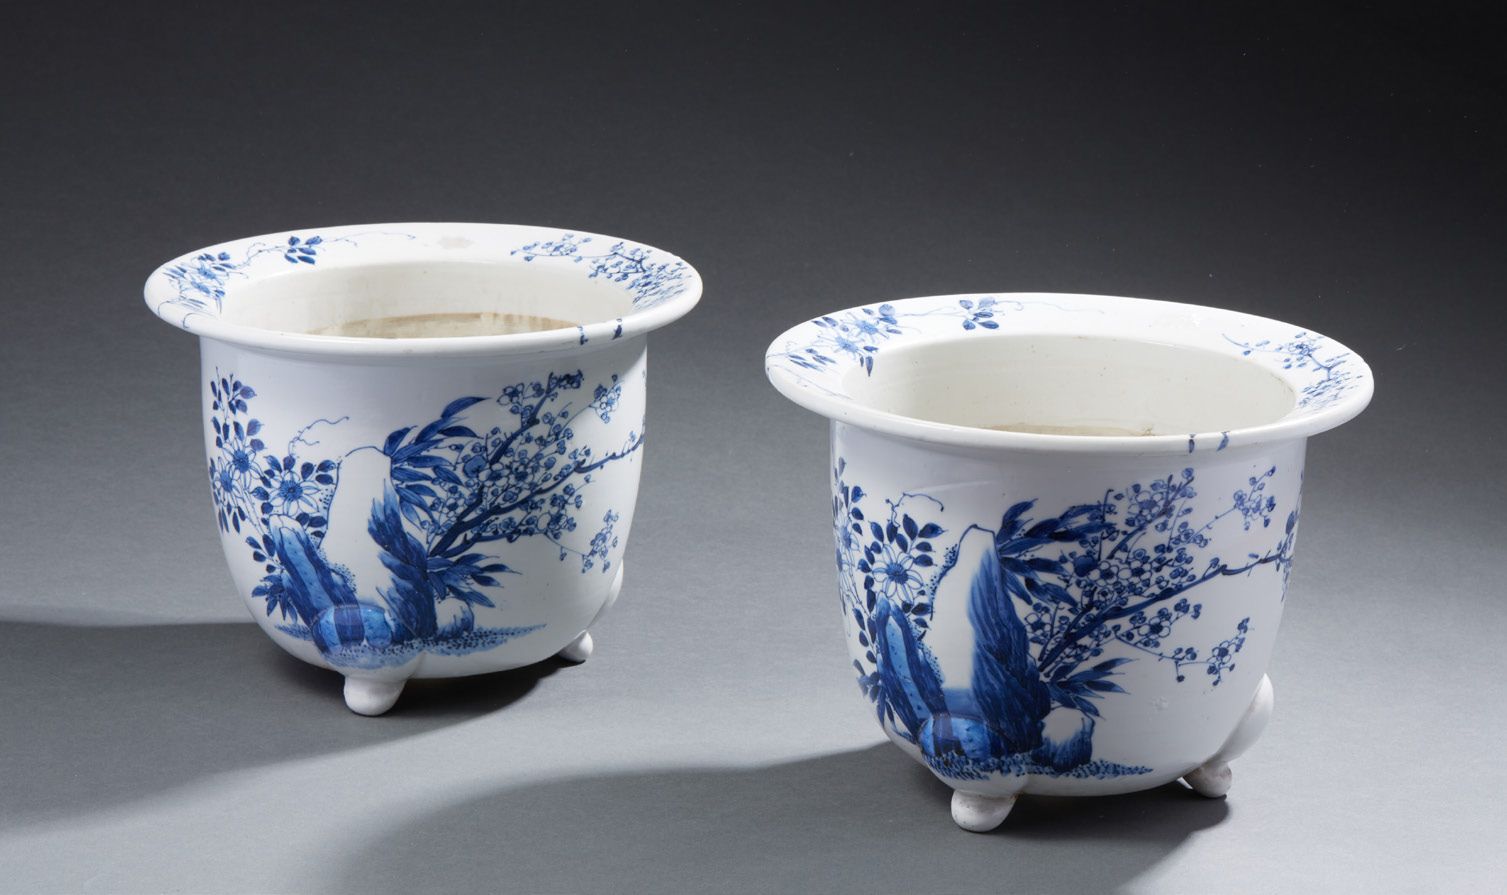 JAPON 一对蓝色装饰梅花和岩石的圆形瓷罐盖
20世纪
高: 19厘米